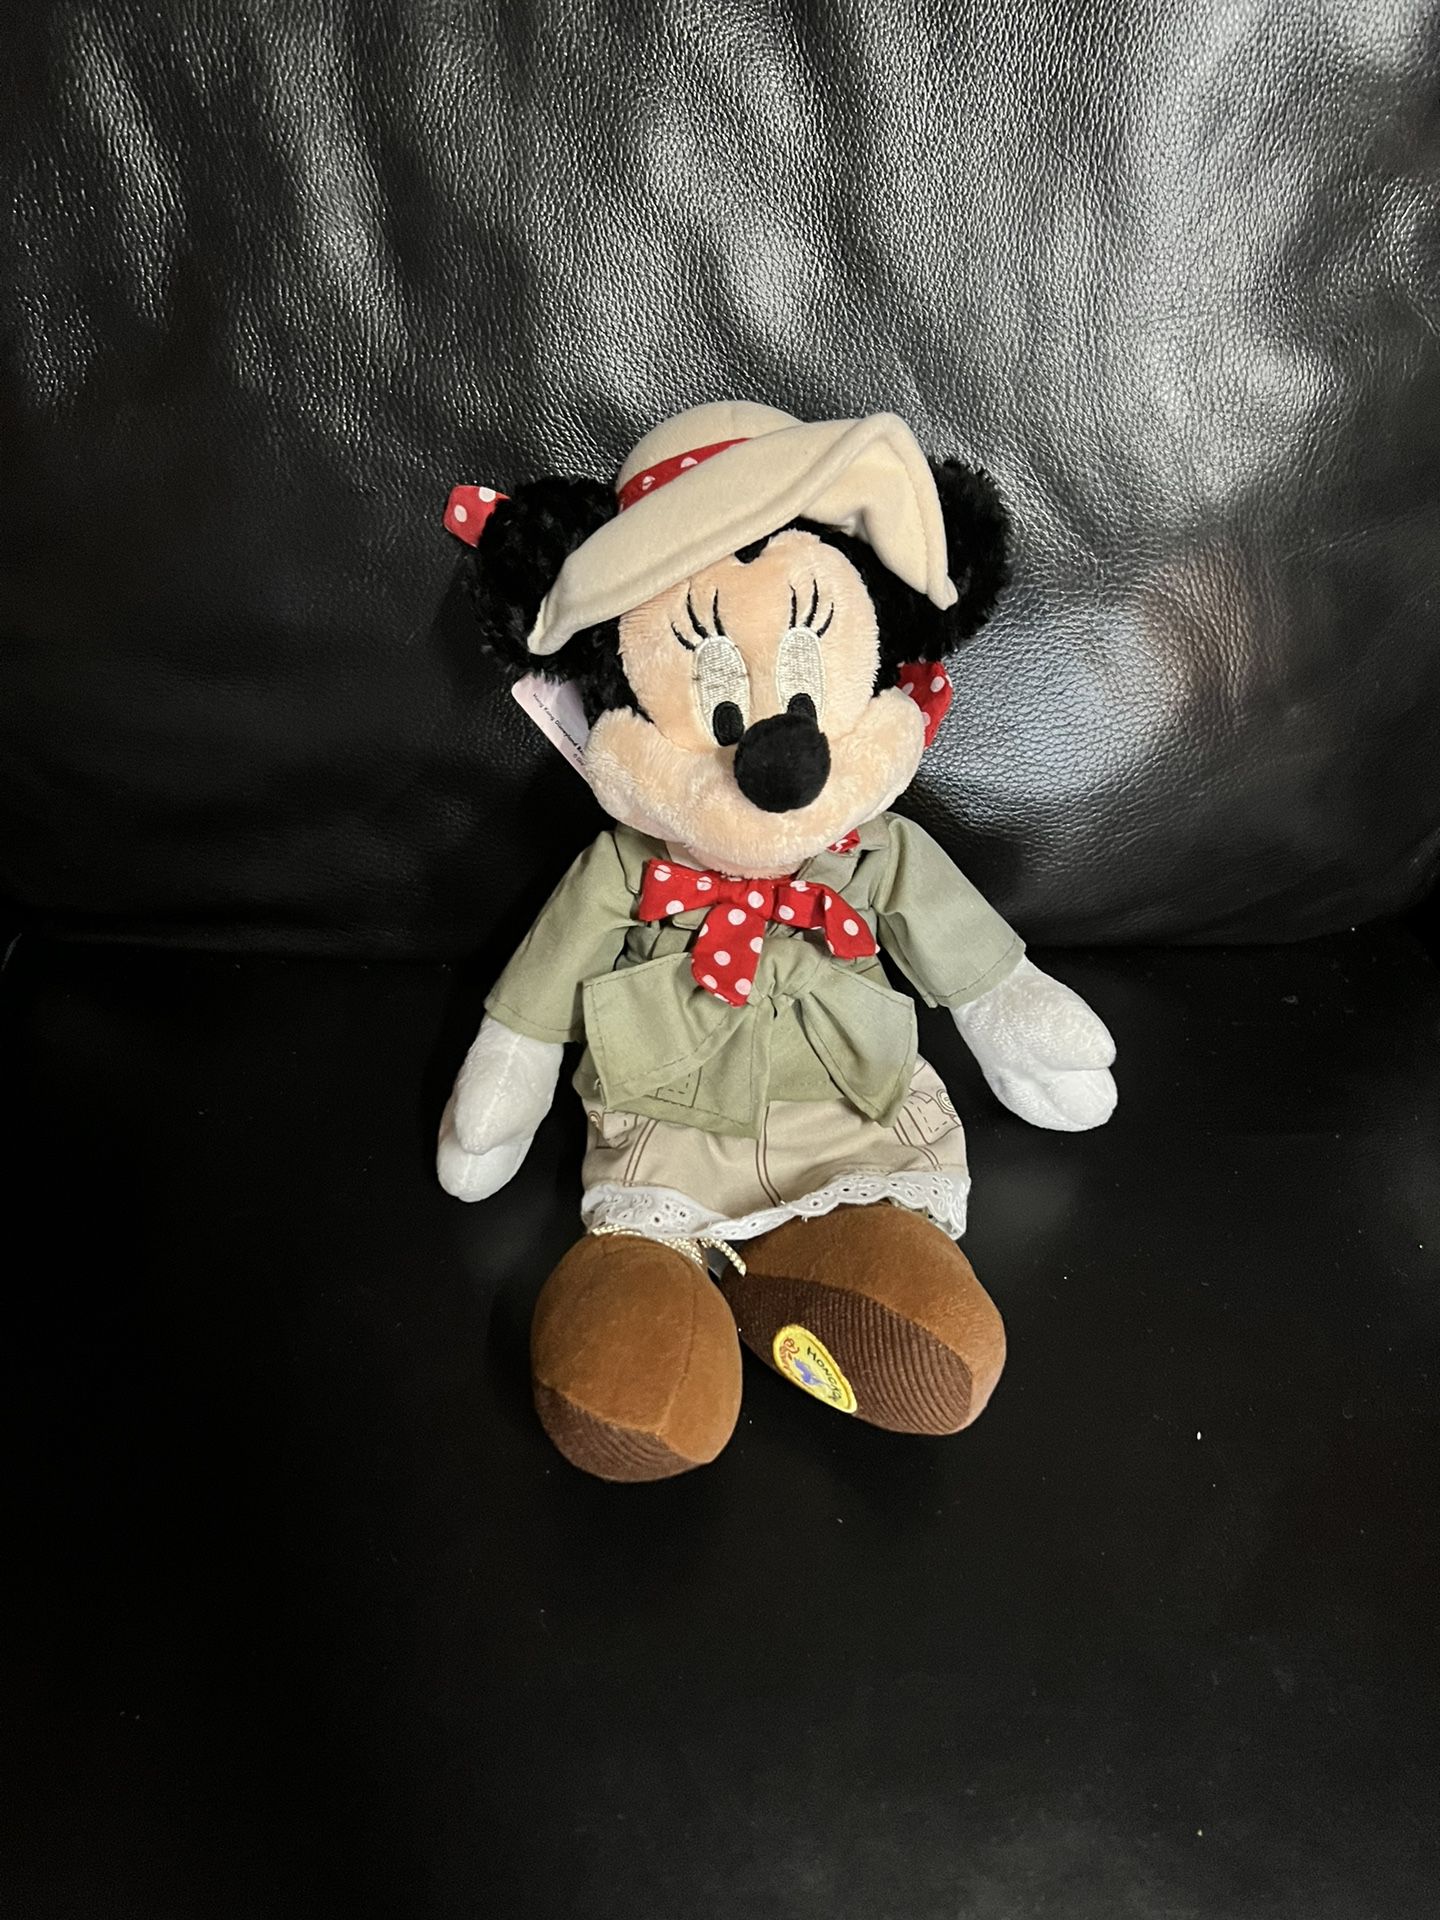 New Disneyland Hong Kong Minnie Mouse plush safari explorer limited stuffed anim